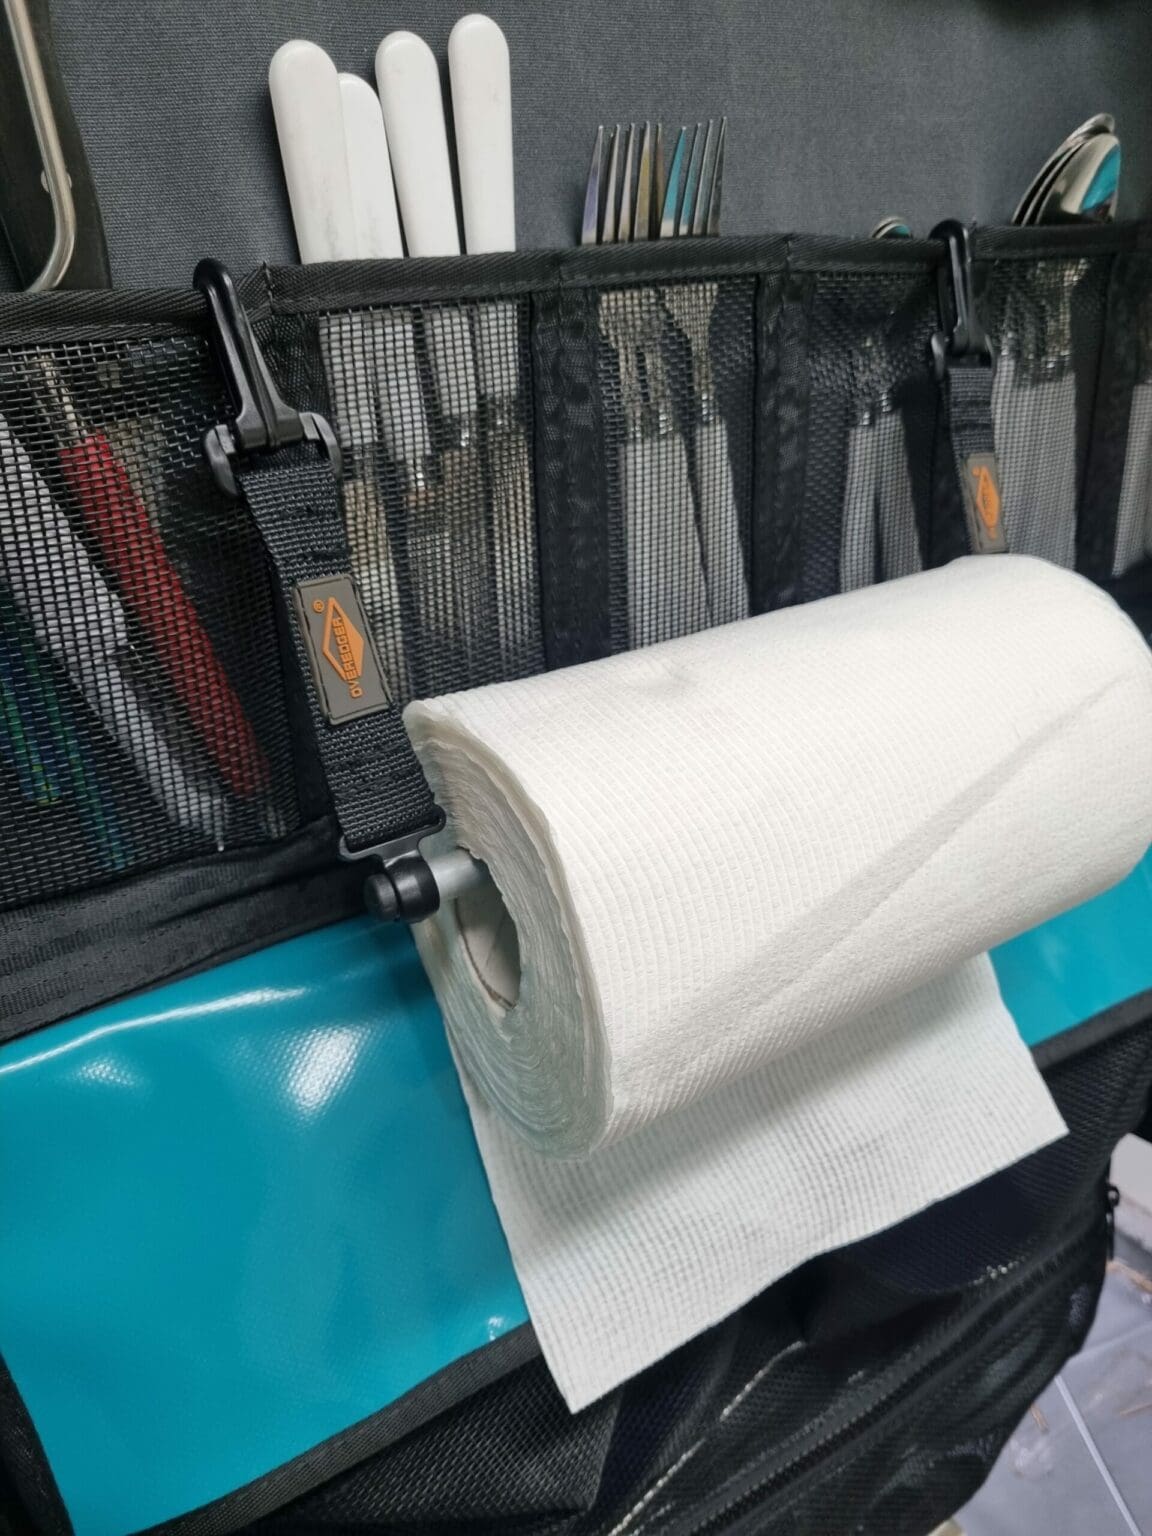 Paper Towel Roll Holder - Overedger Outdoors